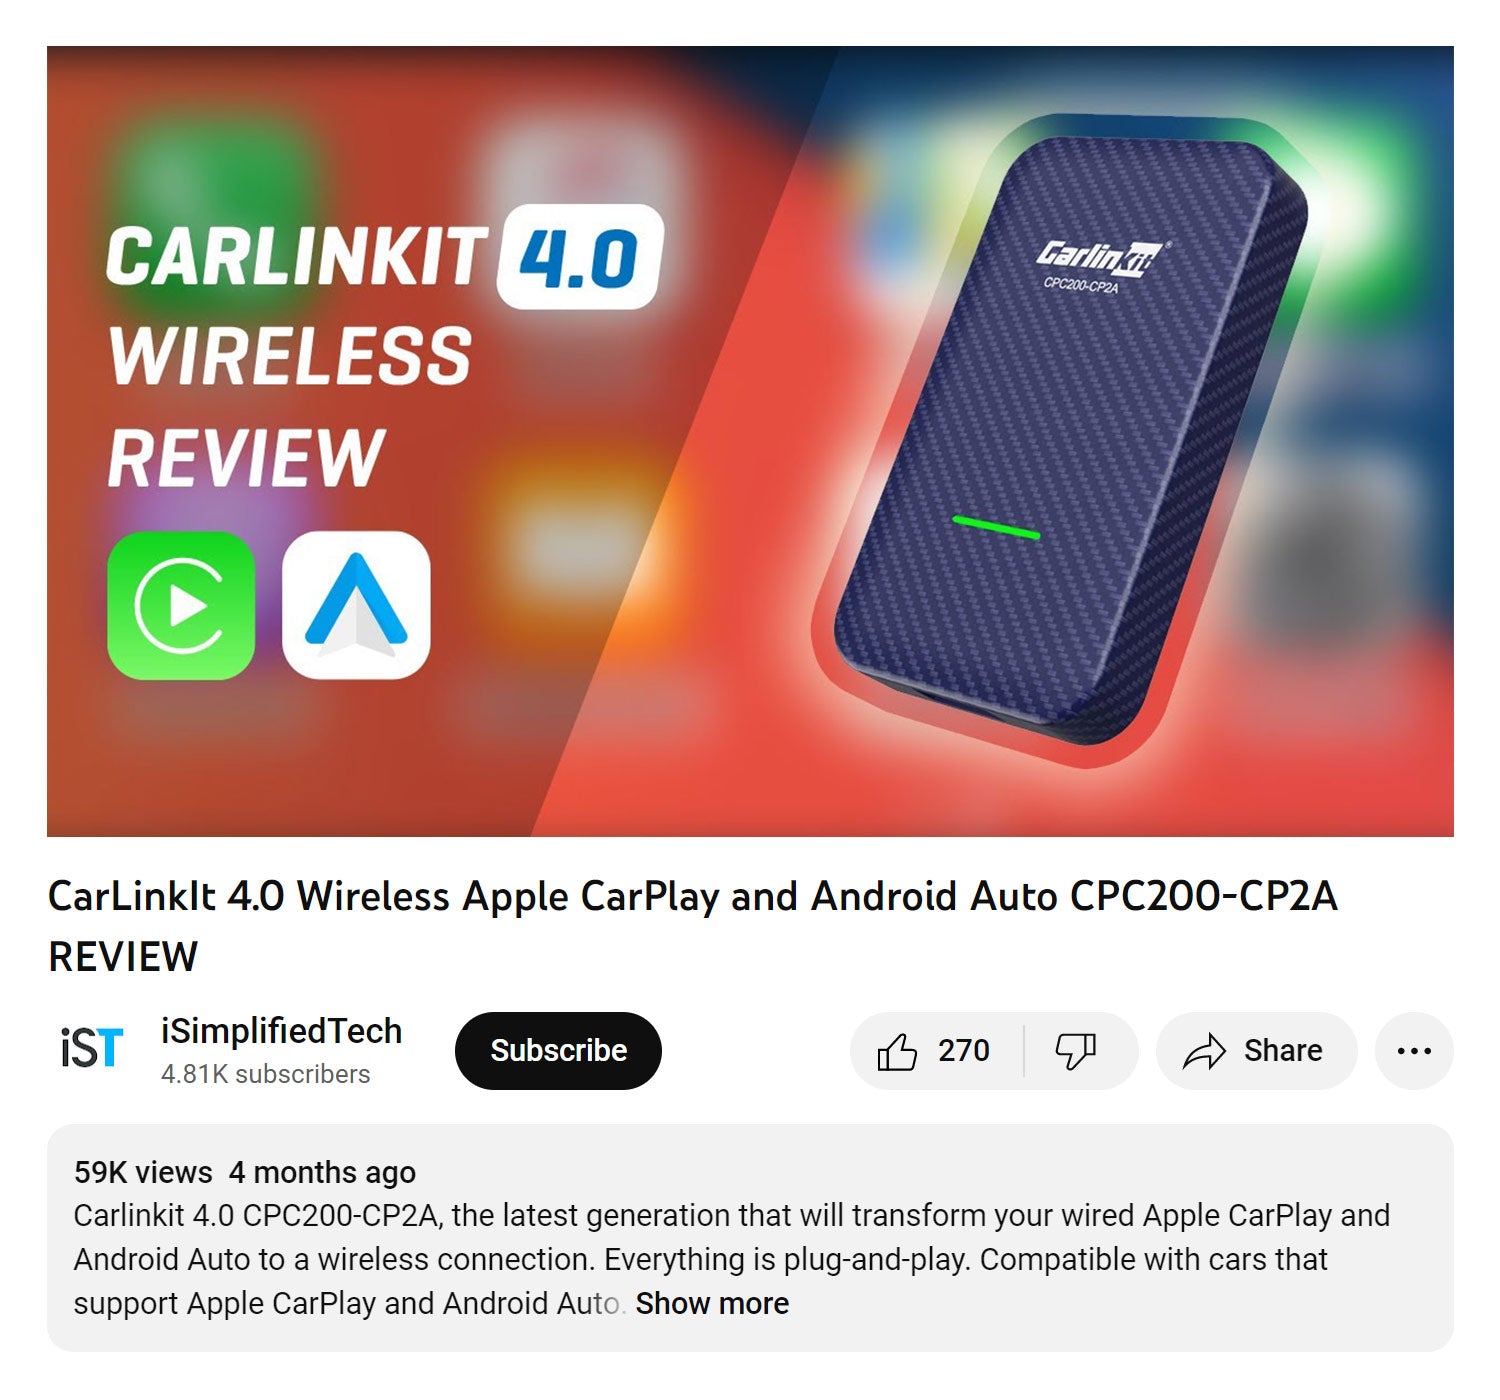 .com: Carlinkit 4.0 Wireless Android Auto & Wireless CarPlay